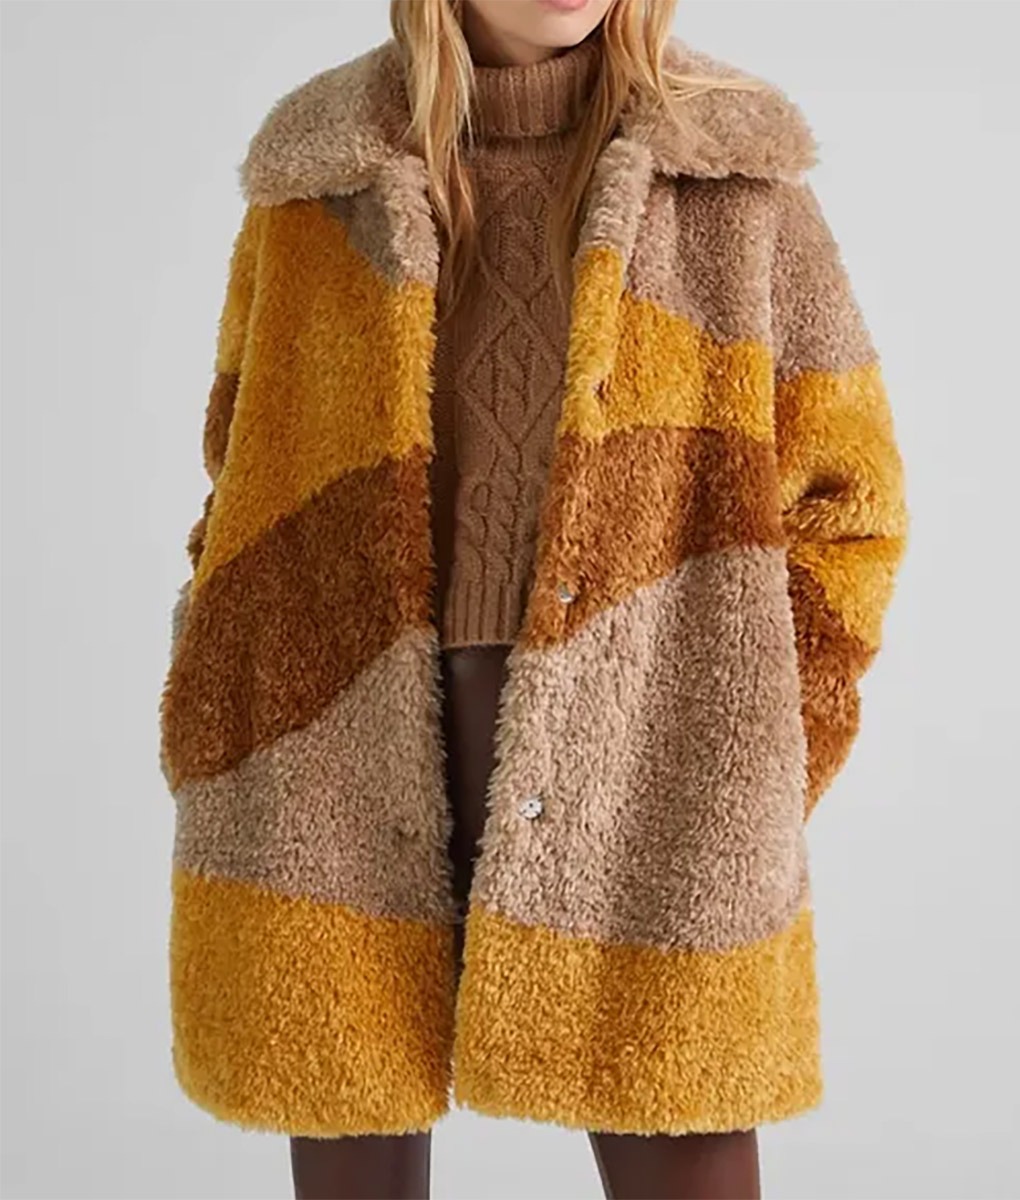 Roisin Gallagher The Lovers Fur Coat (3)